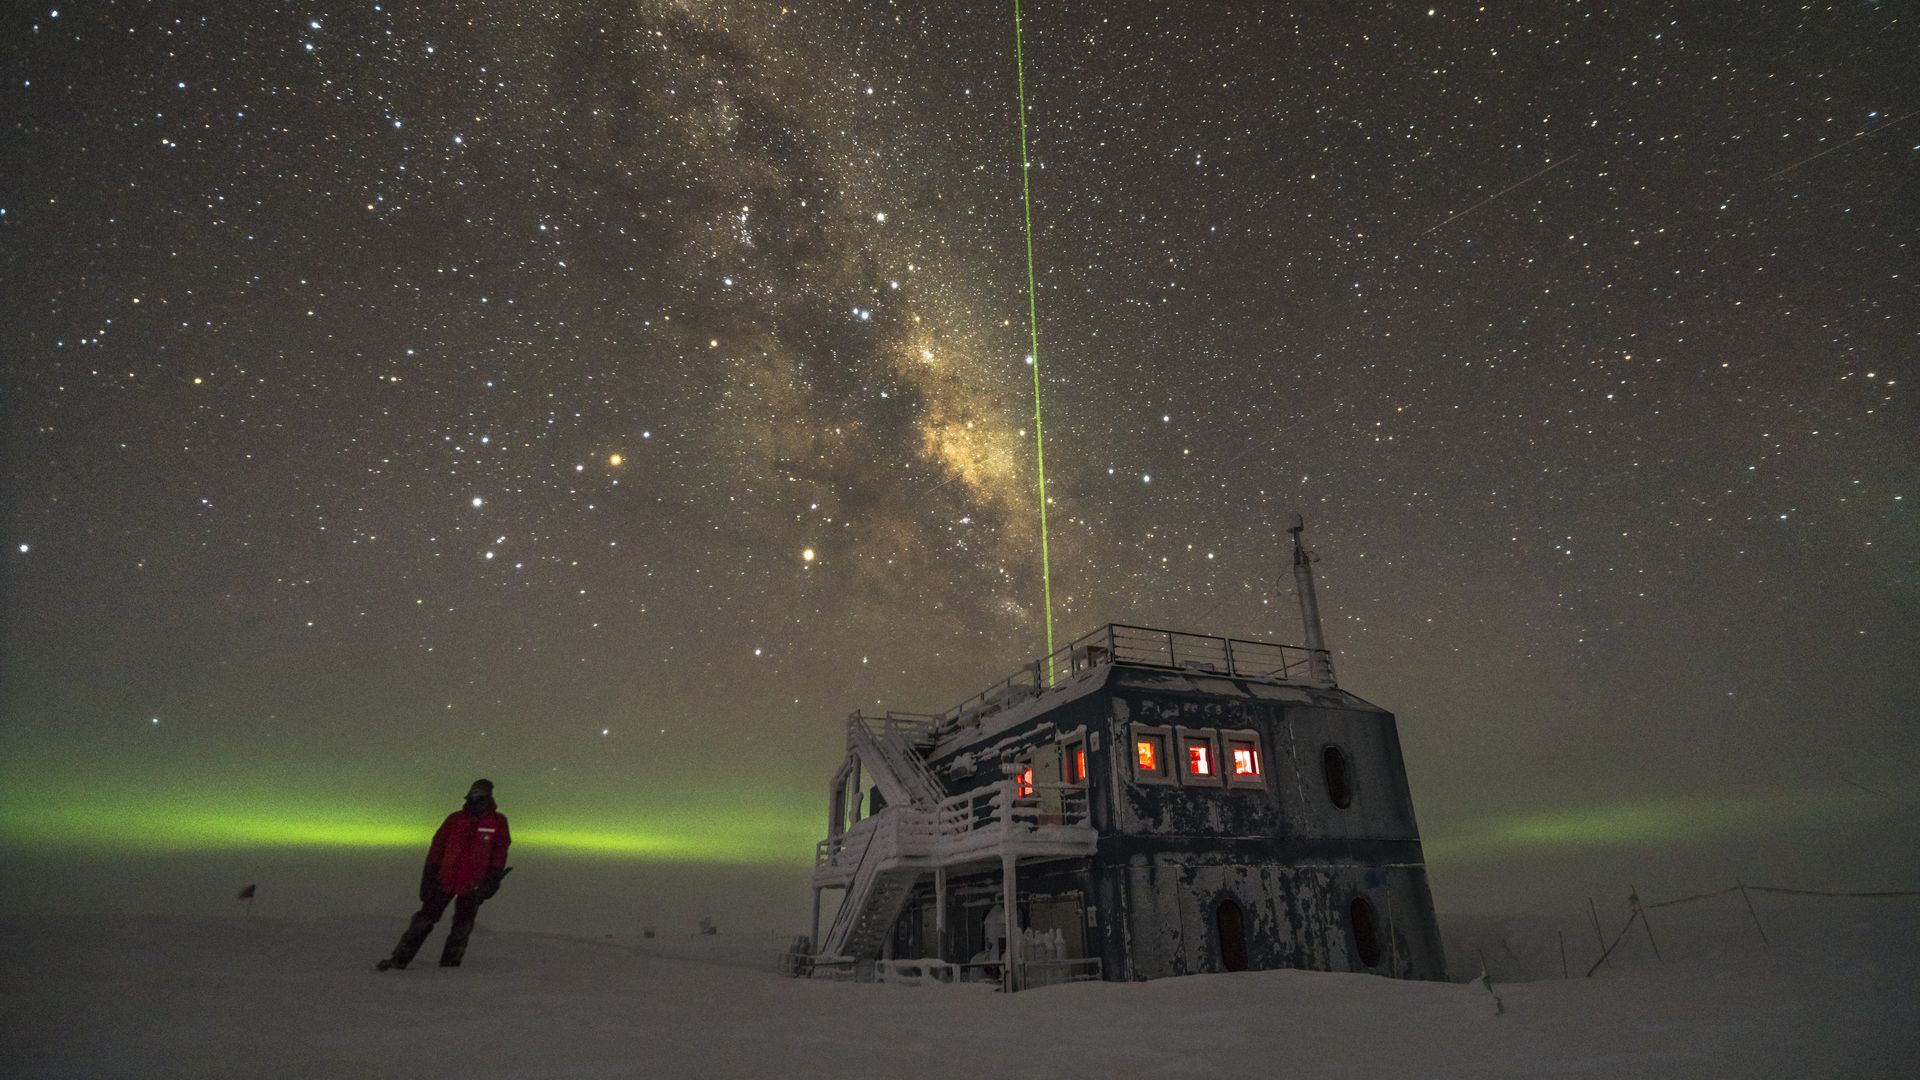 IceCube lab in Antarctica under the stars.